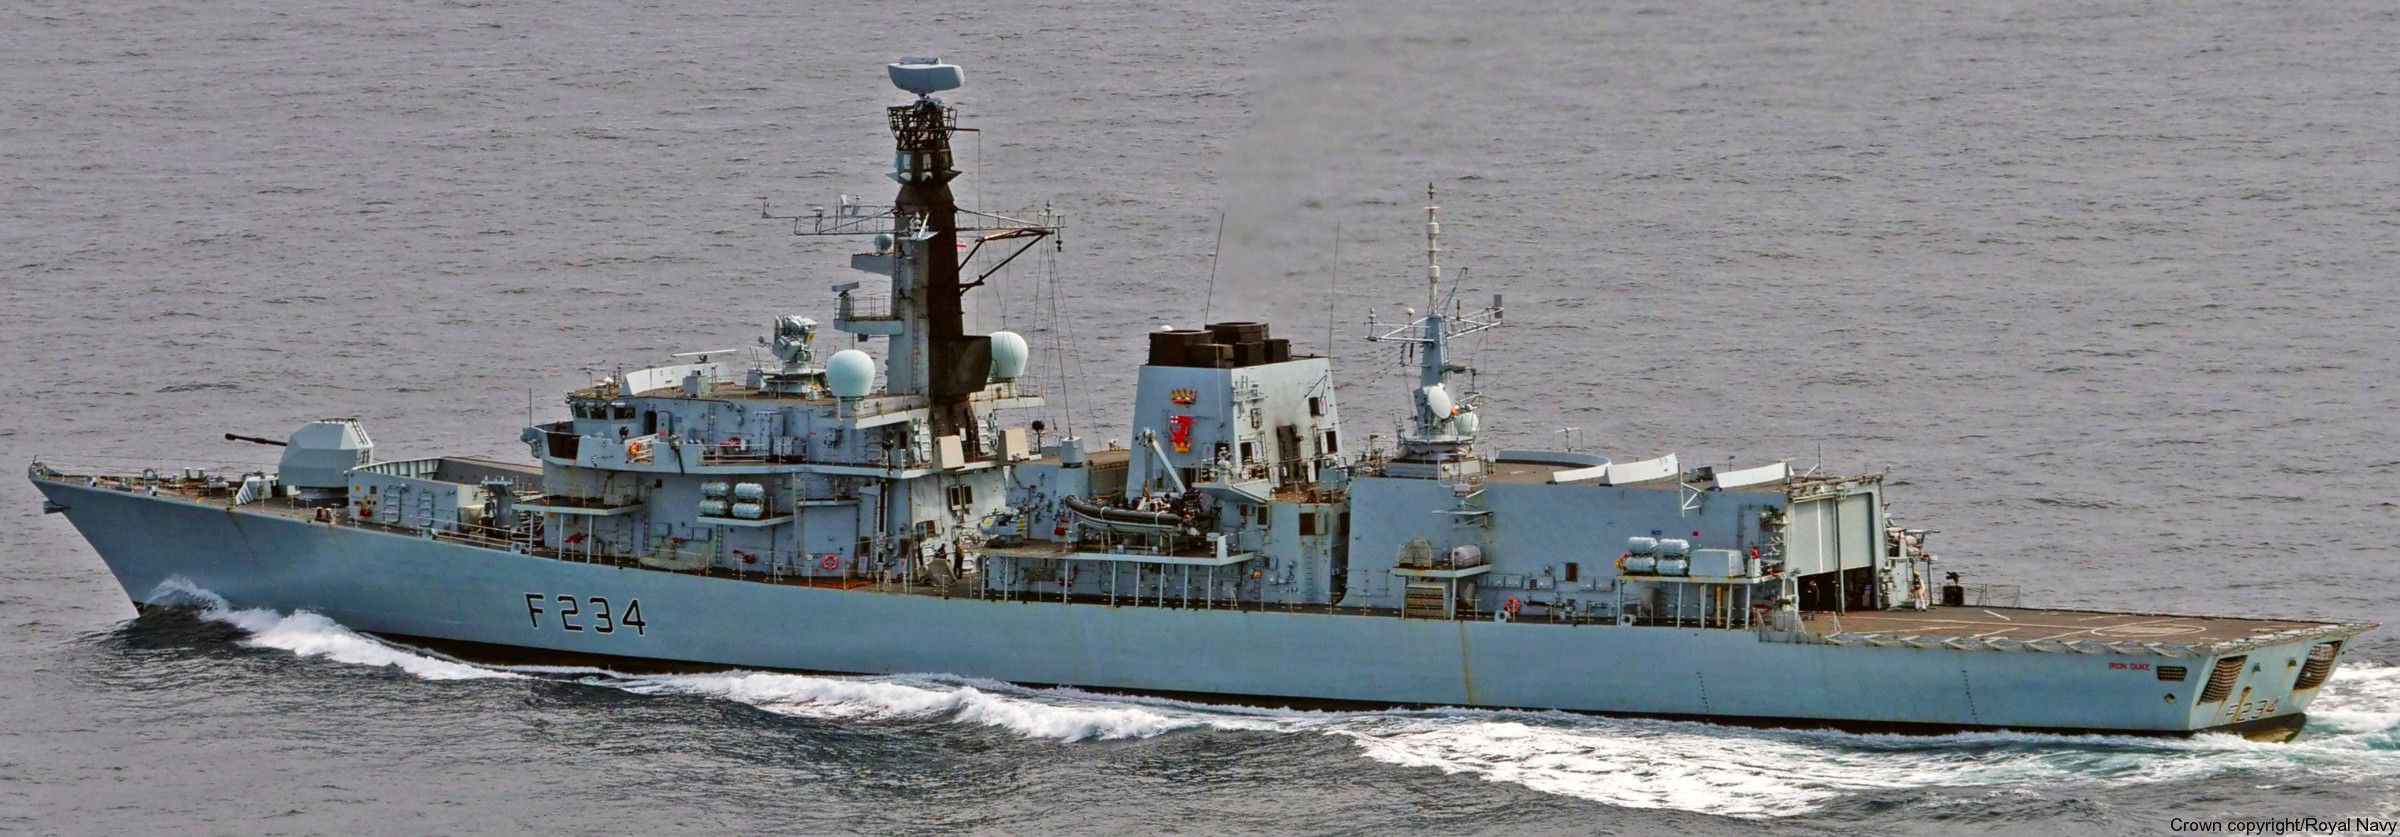 f-234 hms iron duke type 23 duke class guided missile frigate royal navy 24